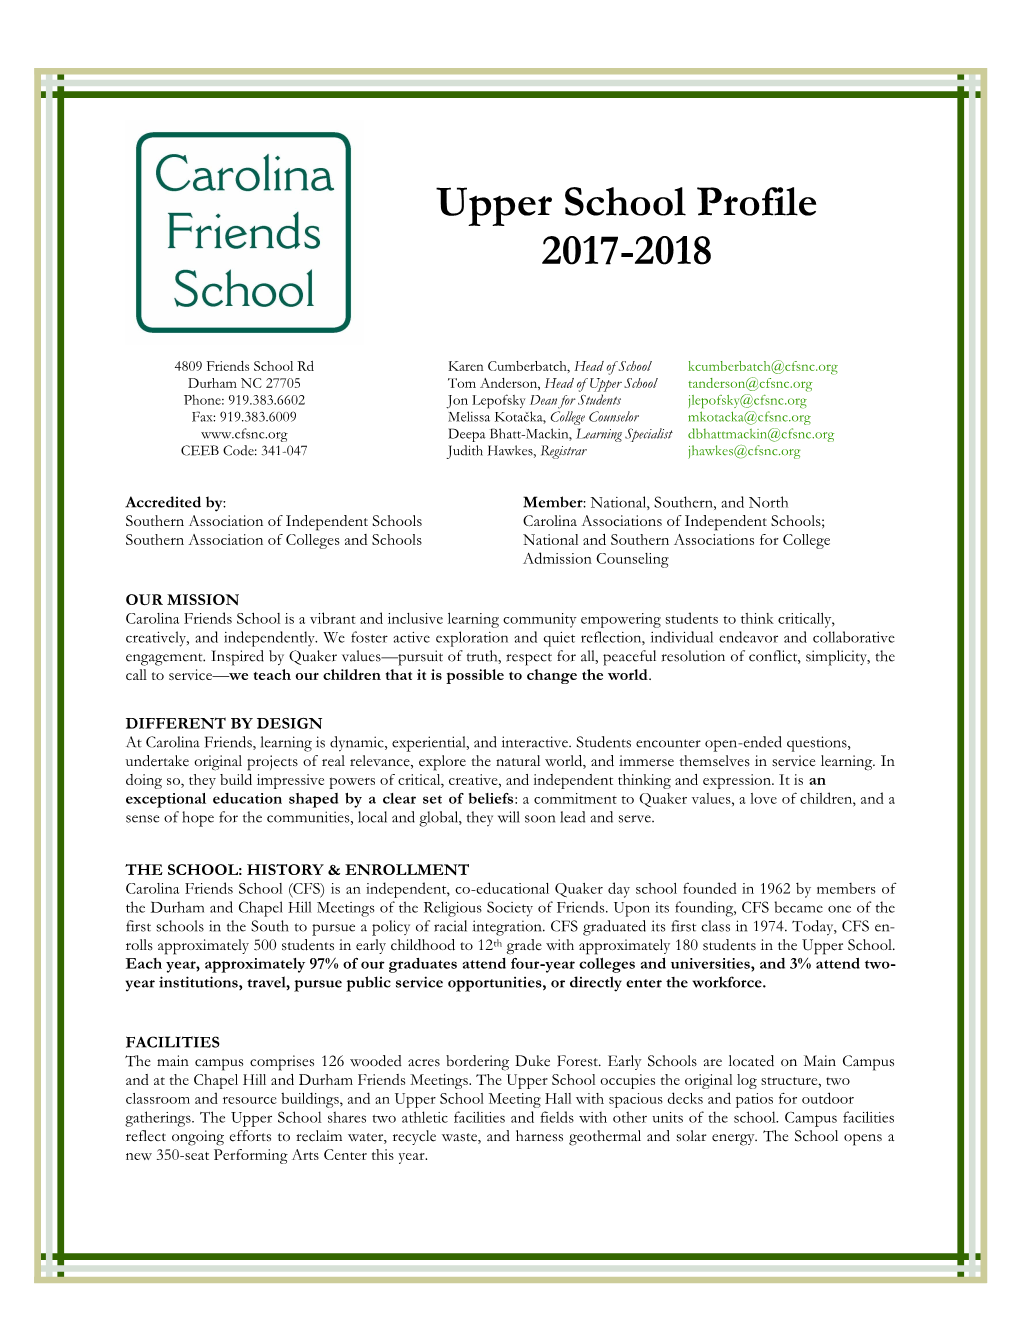 Upper School Profile 2017-2018